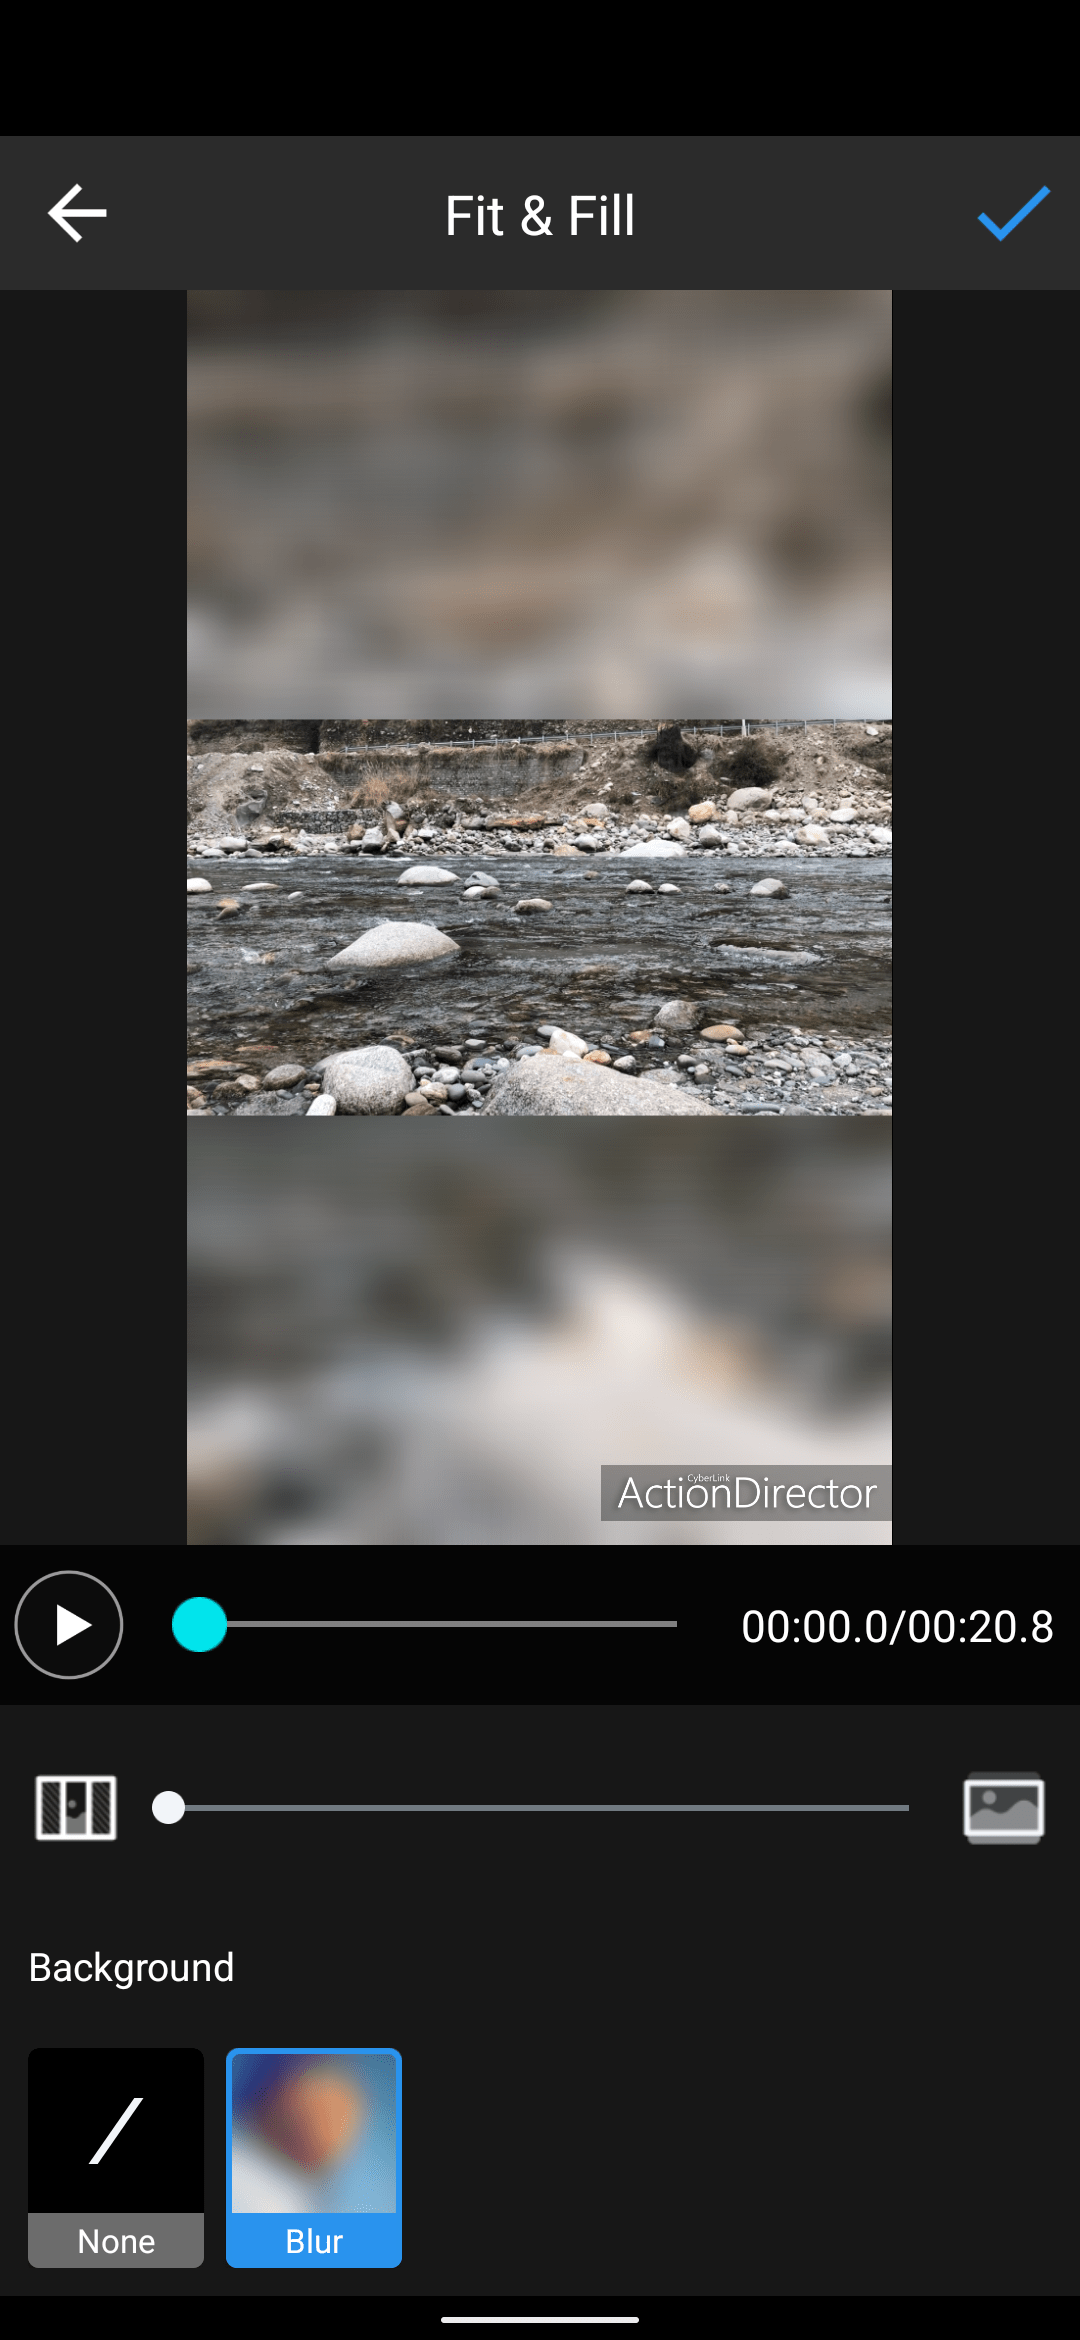 Add blur background in Action Director